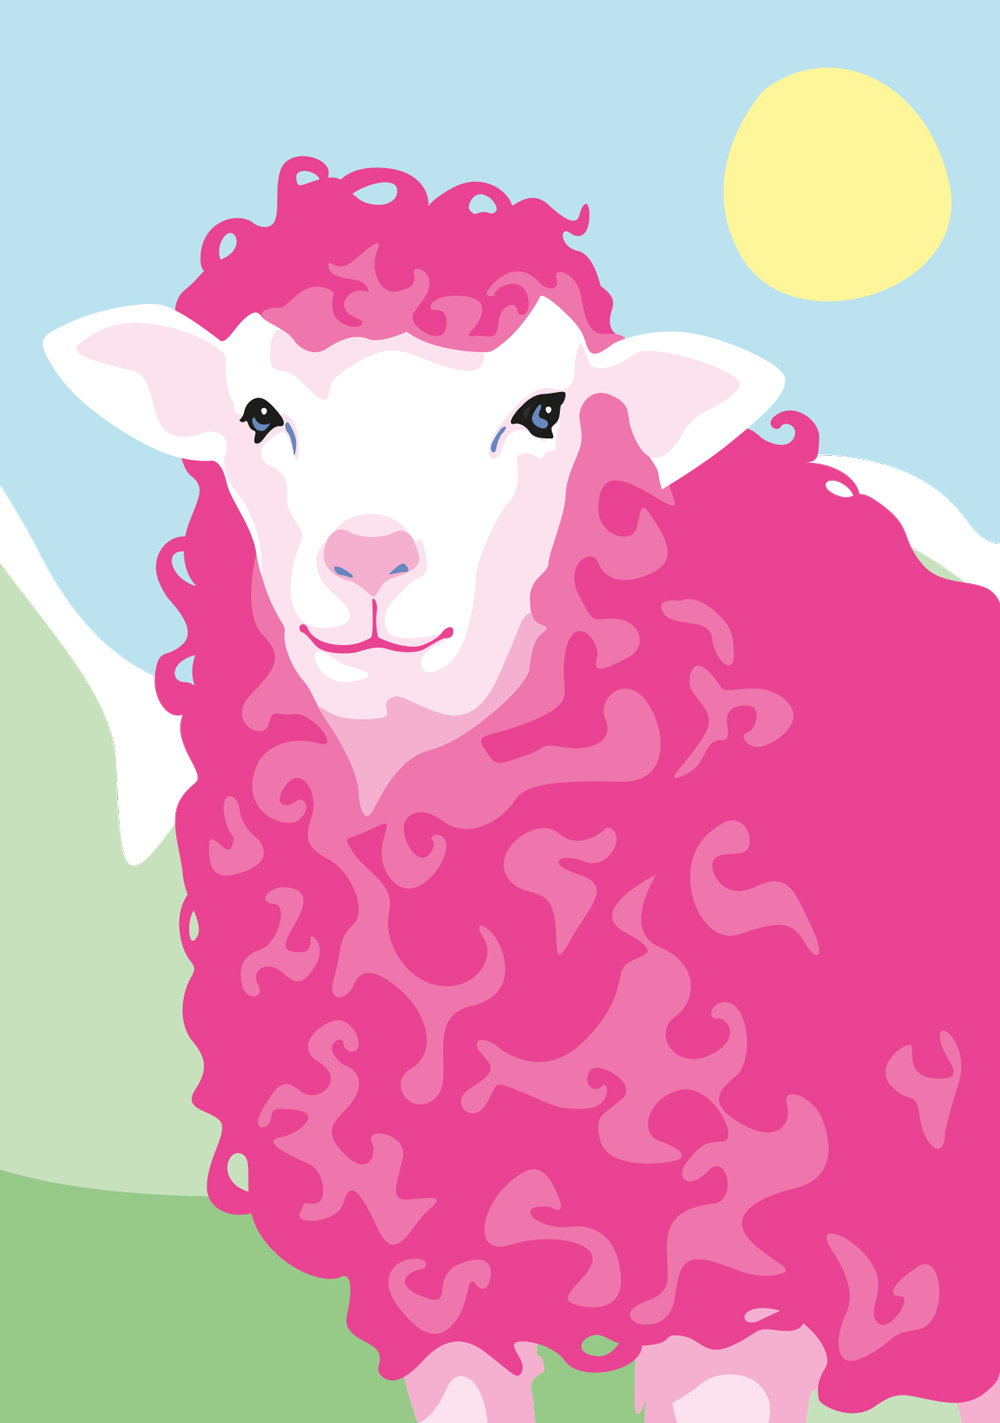 Postcard - Limoncella - Curly sheep